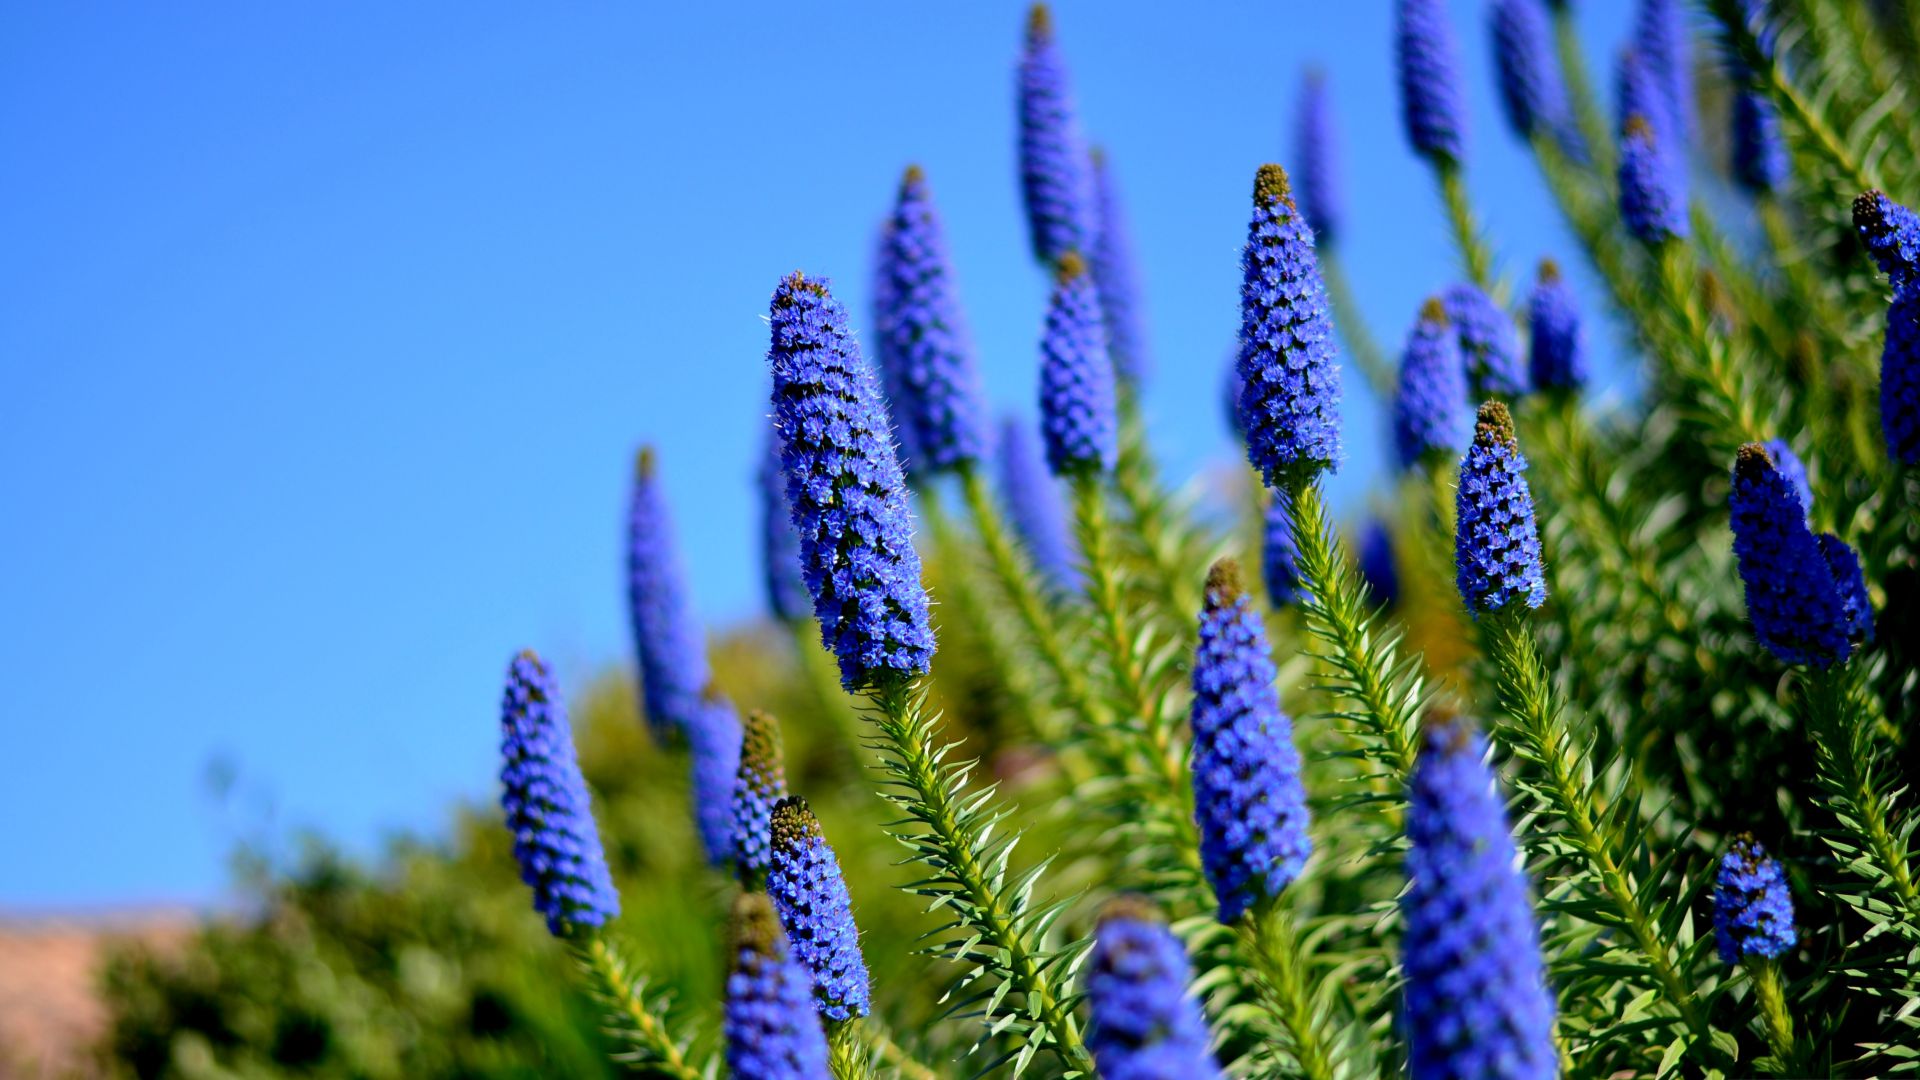 Гортензия, 5k, 4k, цветы, луга, синий, Hydrangea, 5k, 4k wallpaper, flowers, meadows, blue (horizontal)